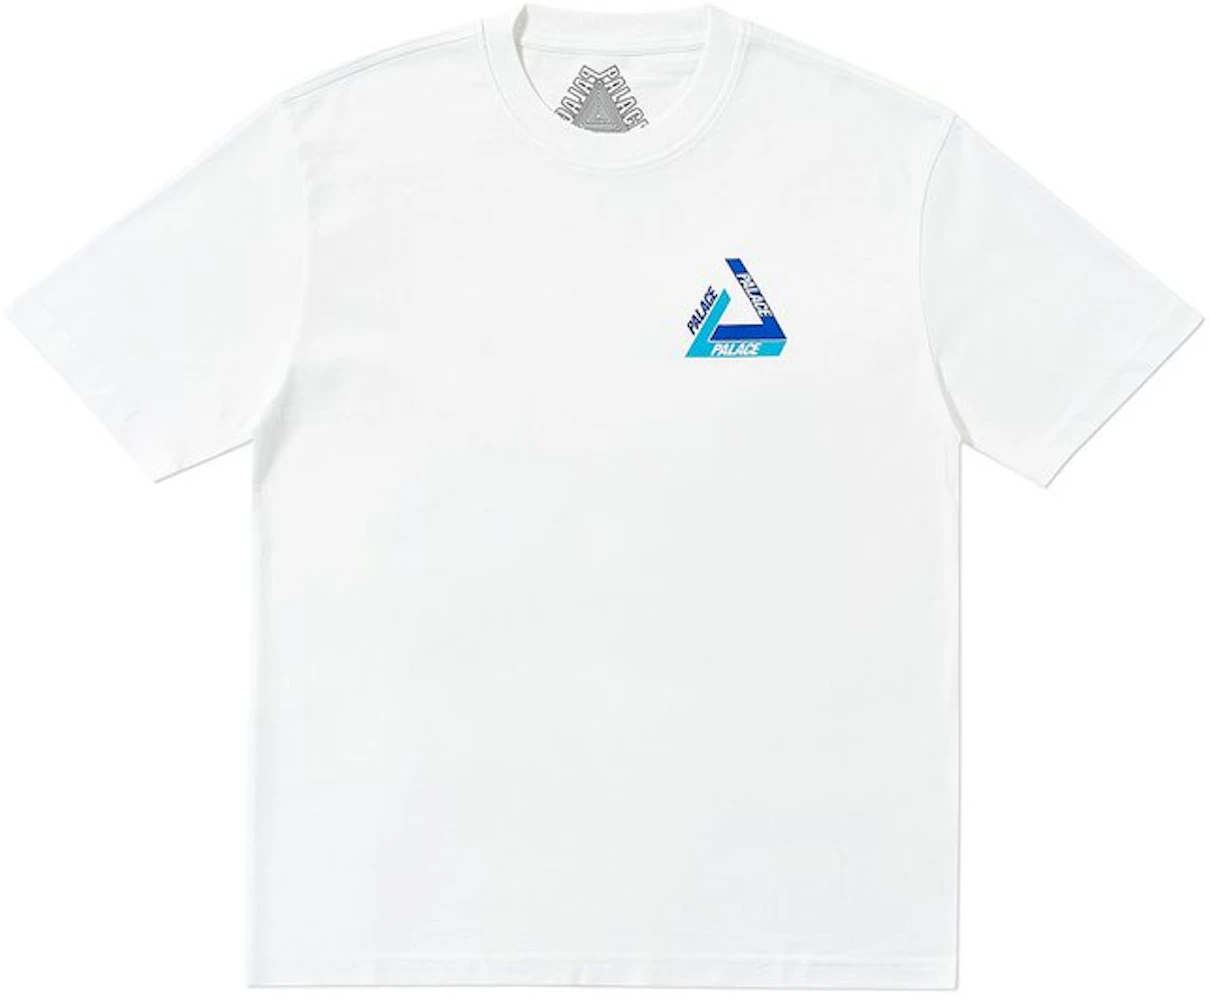 Palace Tri-Shadow T-Shirt White/Blue Men's - FW18 - US